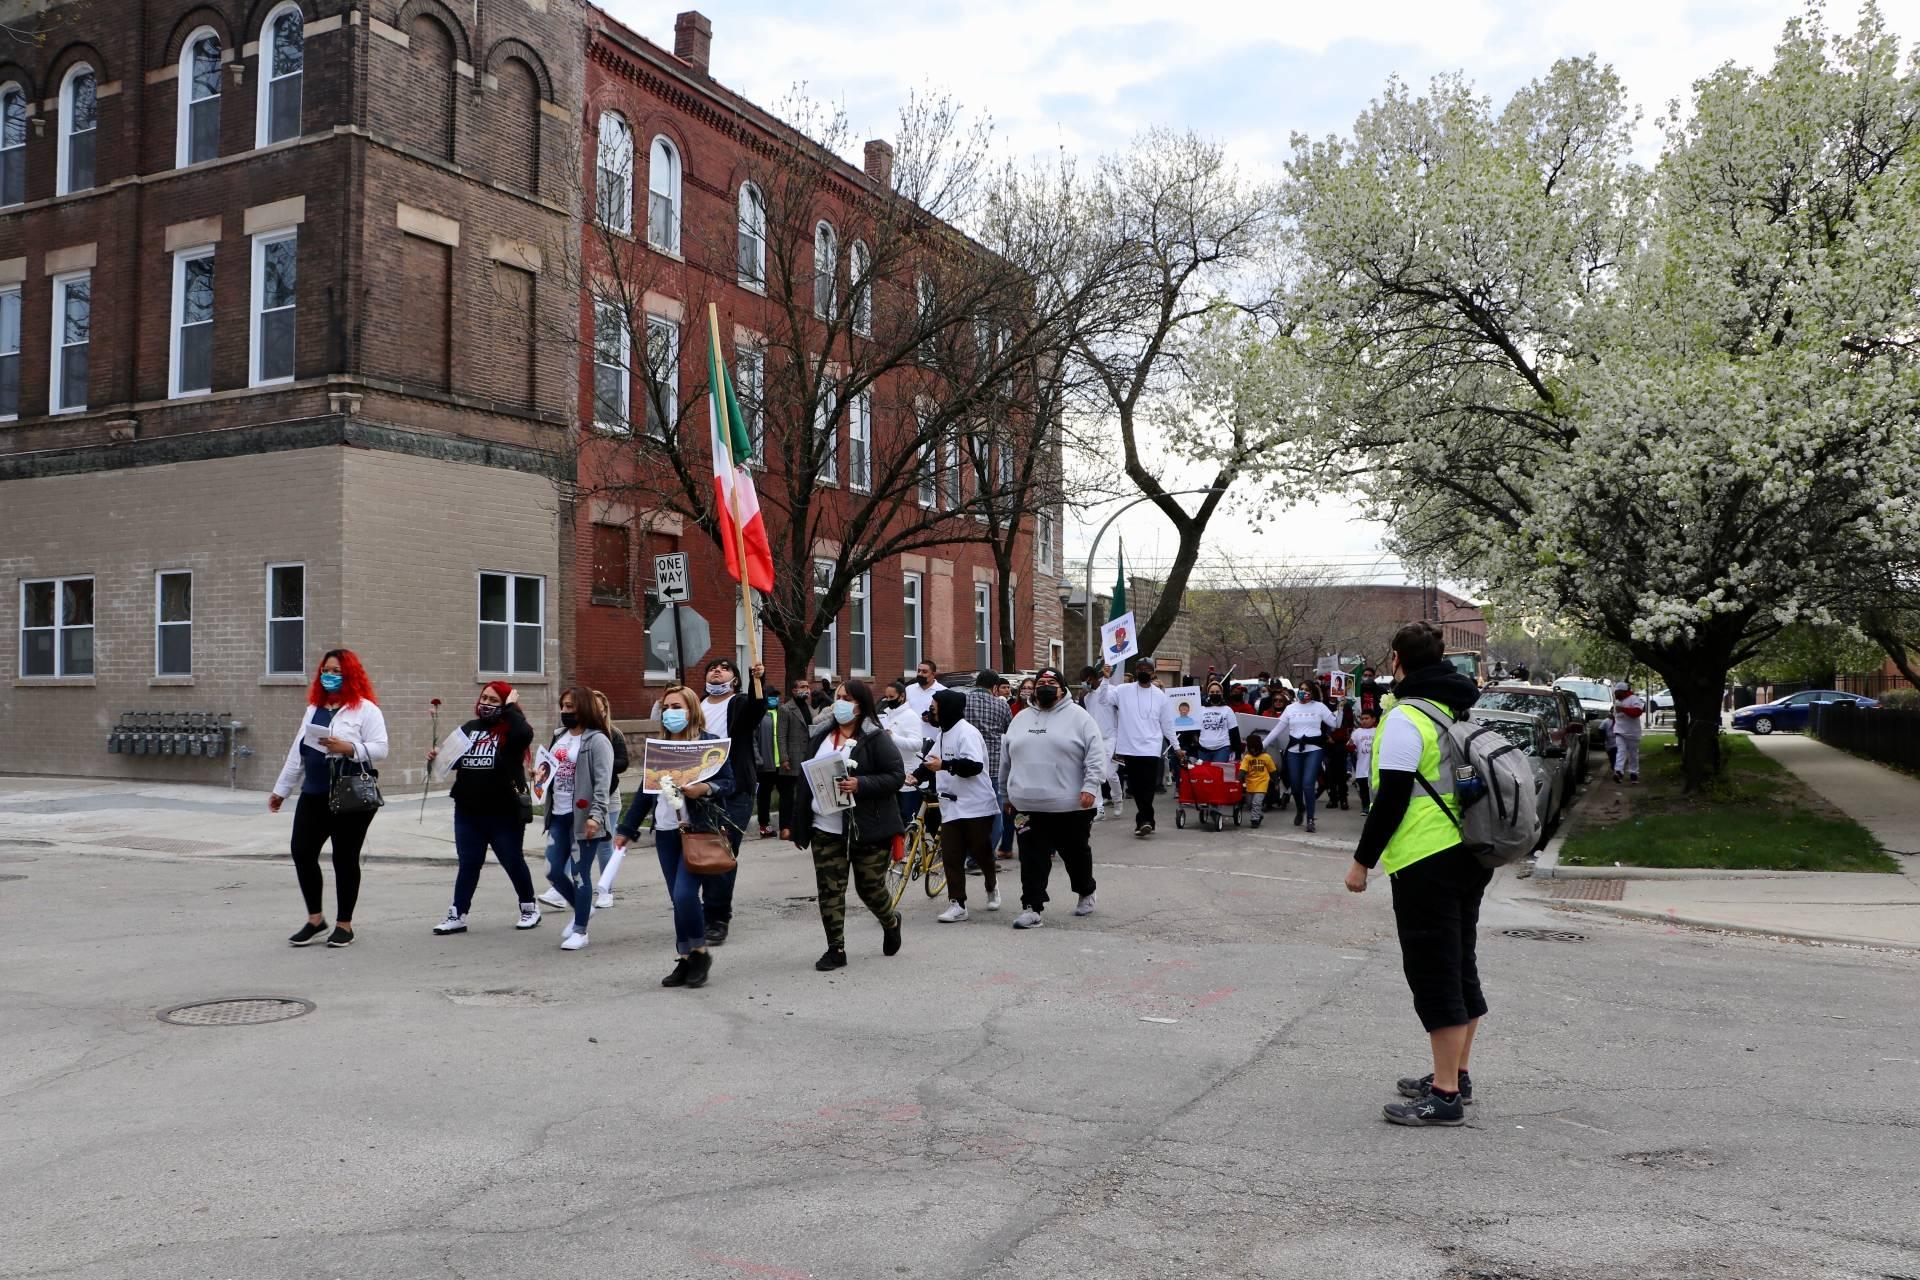 Demonstrators march through the Little Village neighborhood during a peace walk on April 18, 2021. (Evan Garcia / WTTW News)